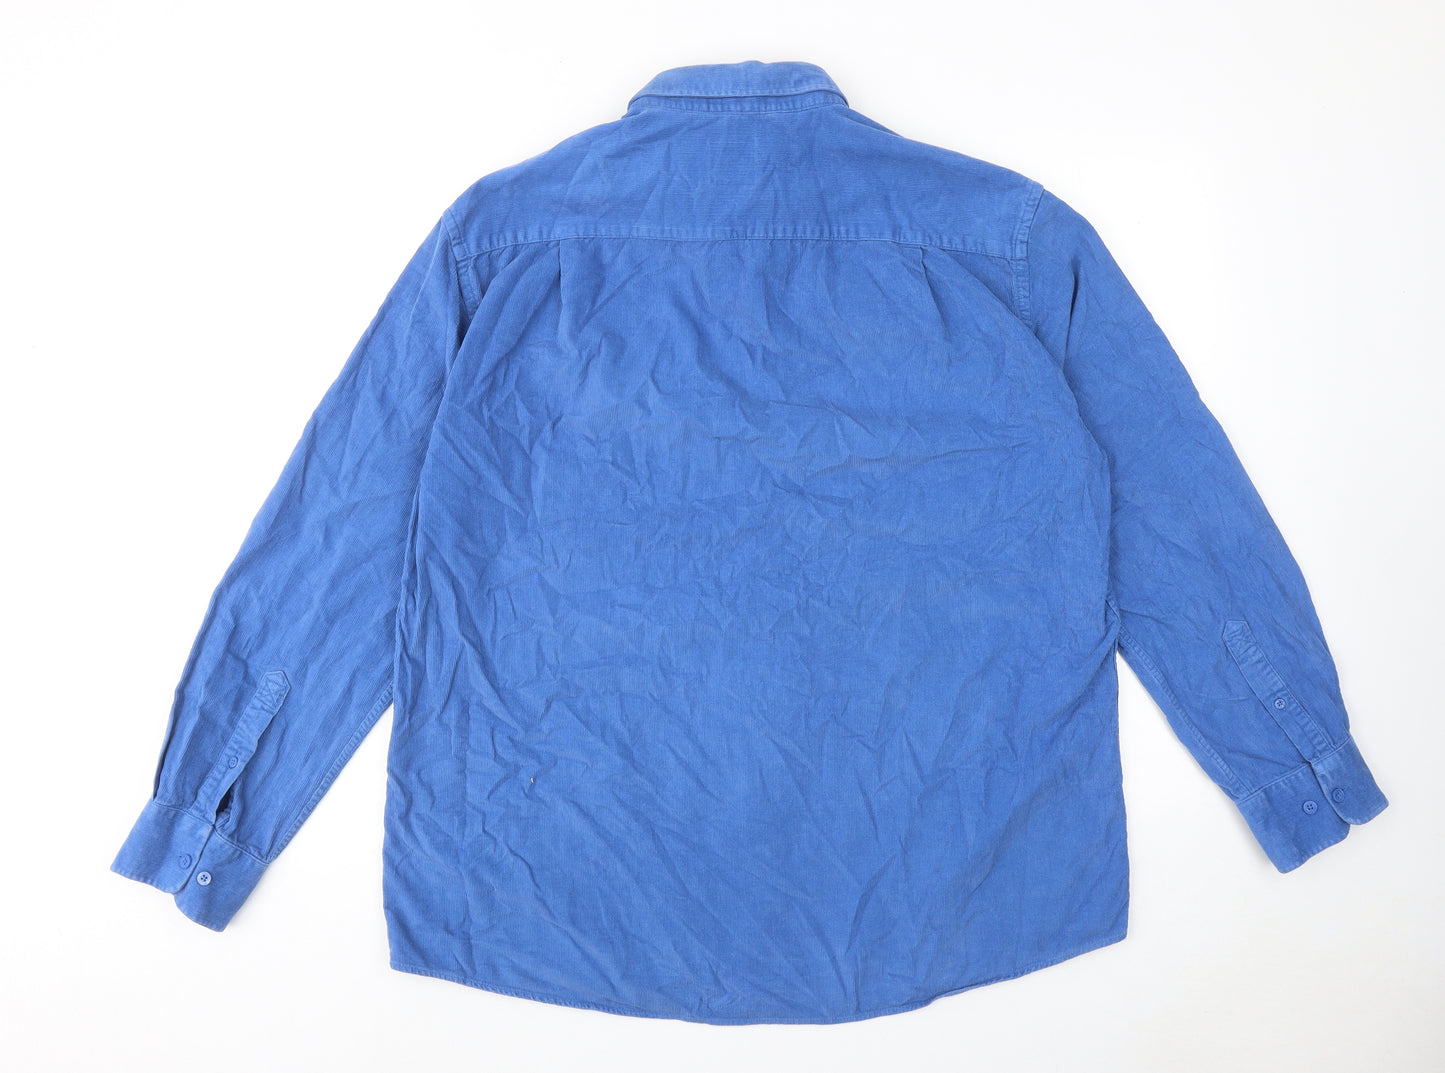 Samuel Windsor Mens Blue Cotton Button-Up Size XL Collared Button